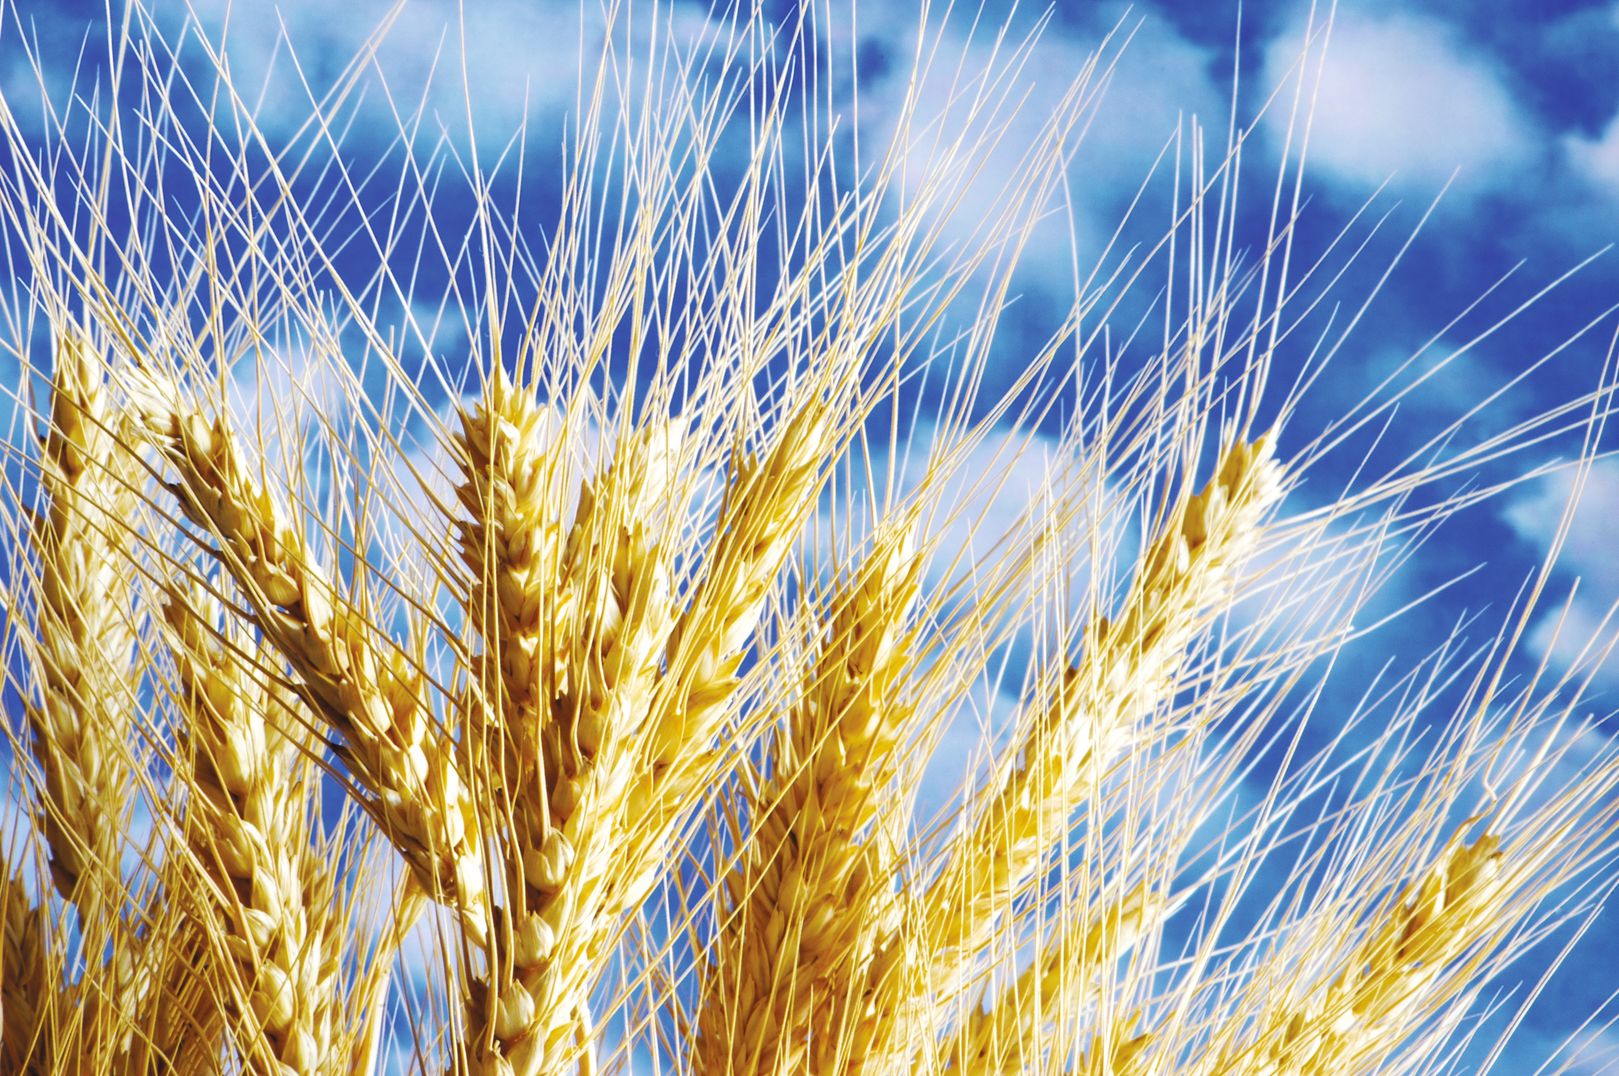 Biofertilizante a base de lactofermento revolucionó los rindes del trigo